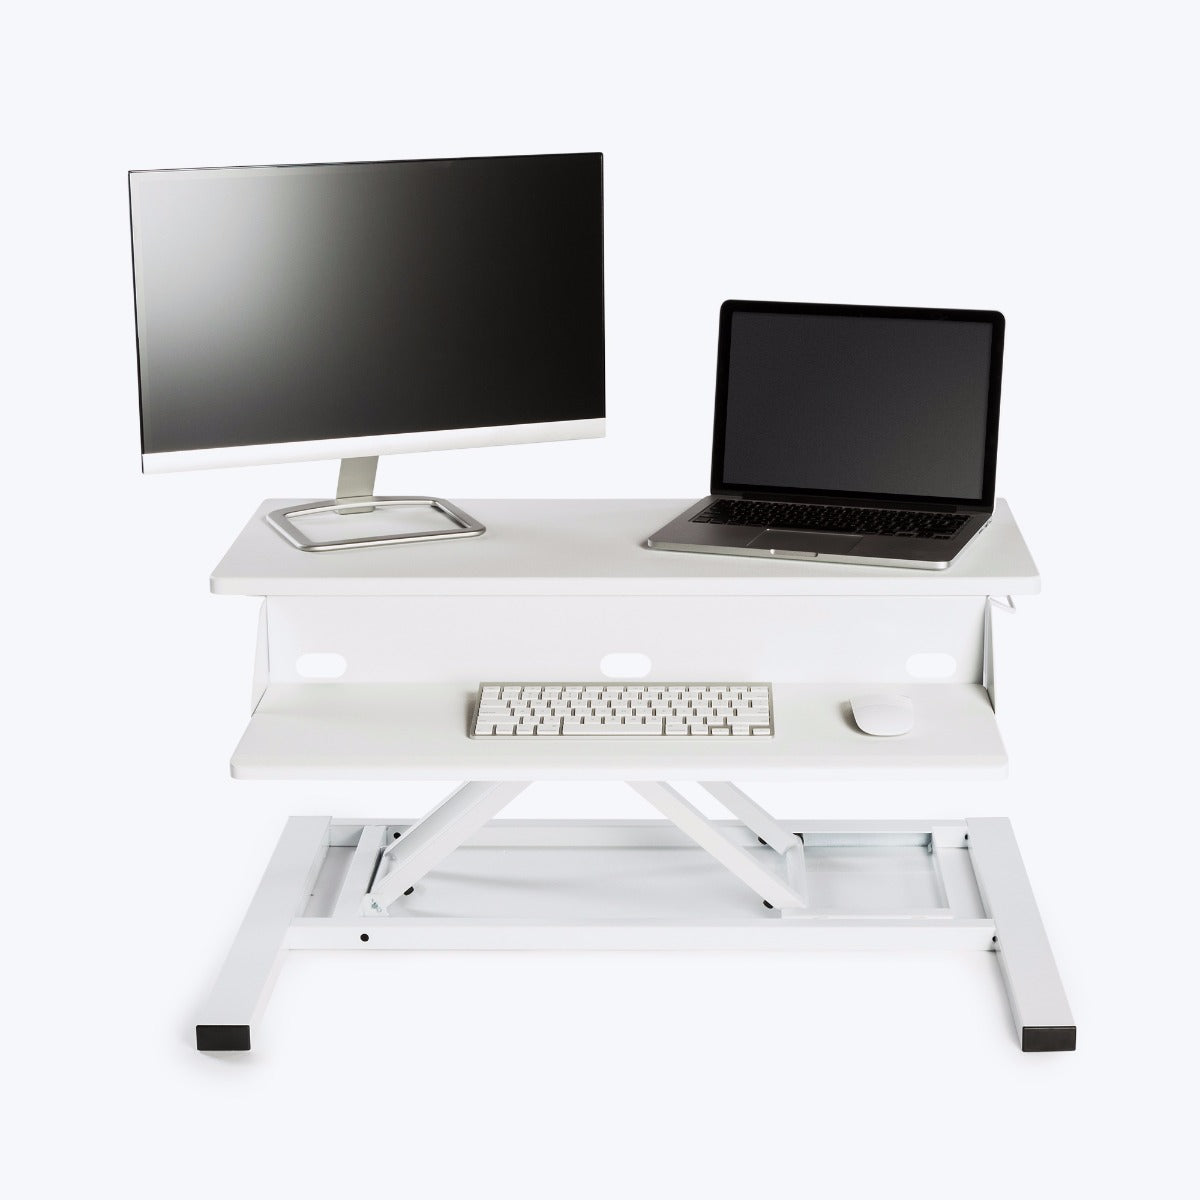 Luxor Pneumatic Standing Desk Converter 32"W x 23.5"D x 5.25" to 15.5"H (White) - CVTR PRO-WH